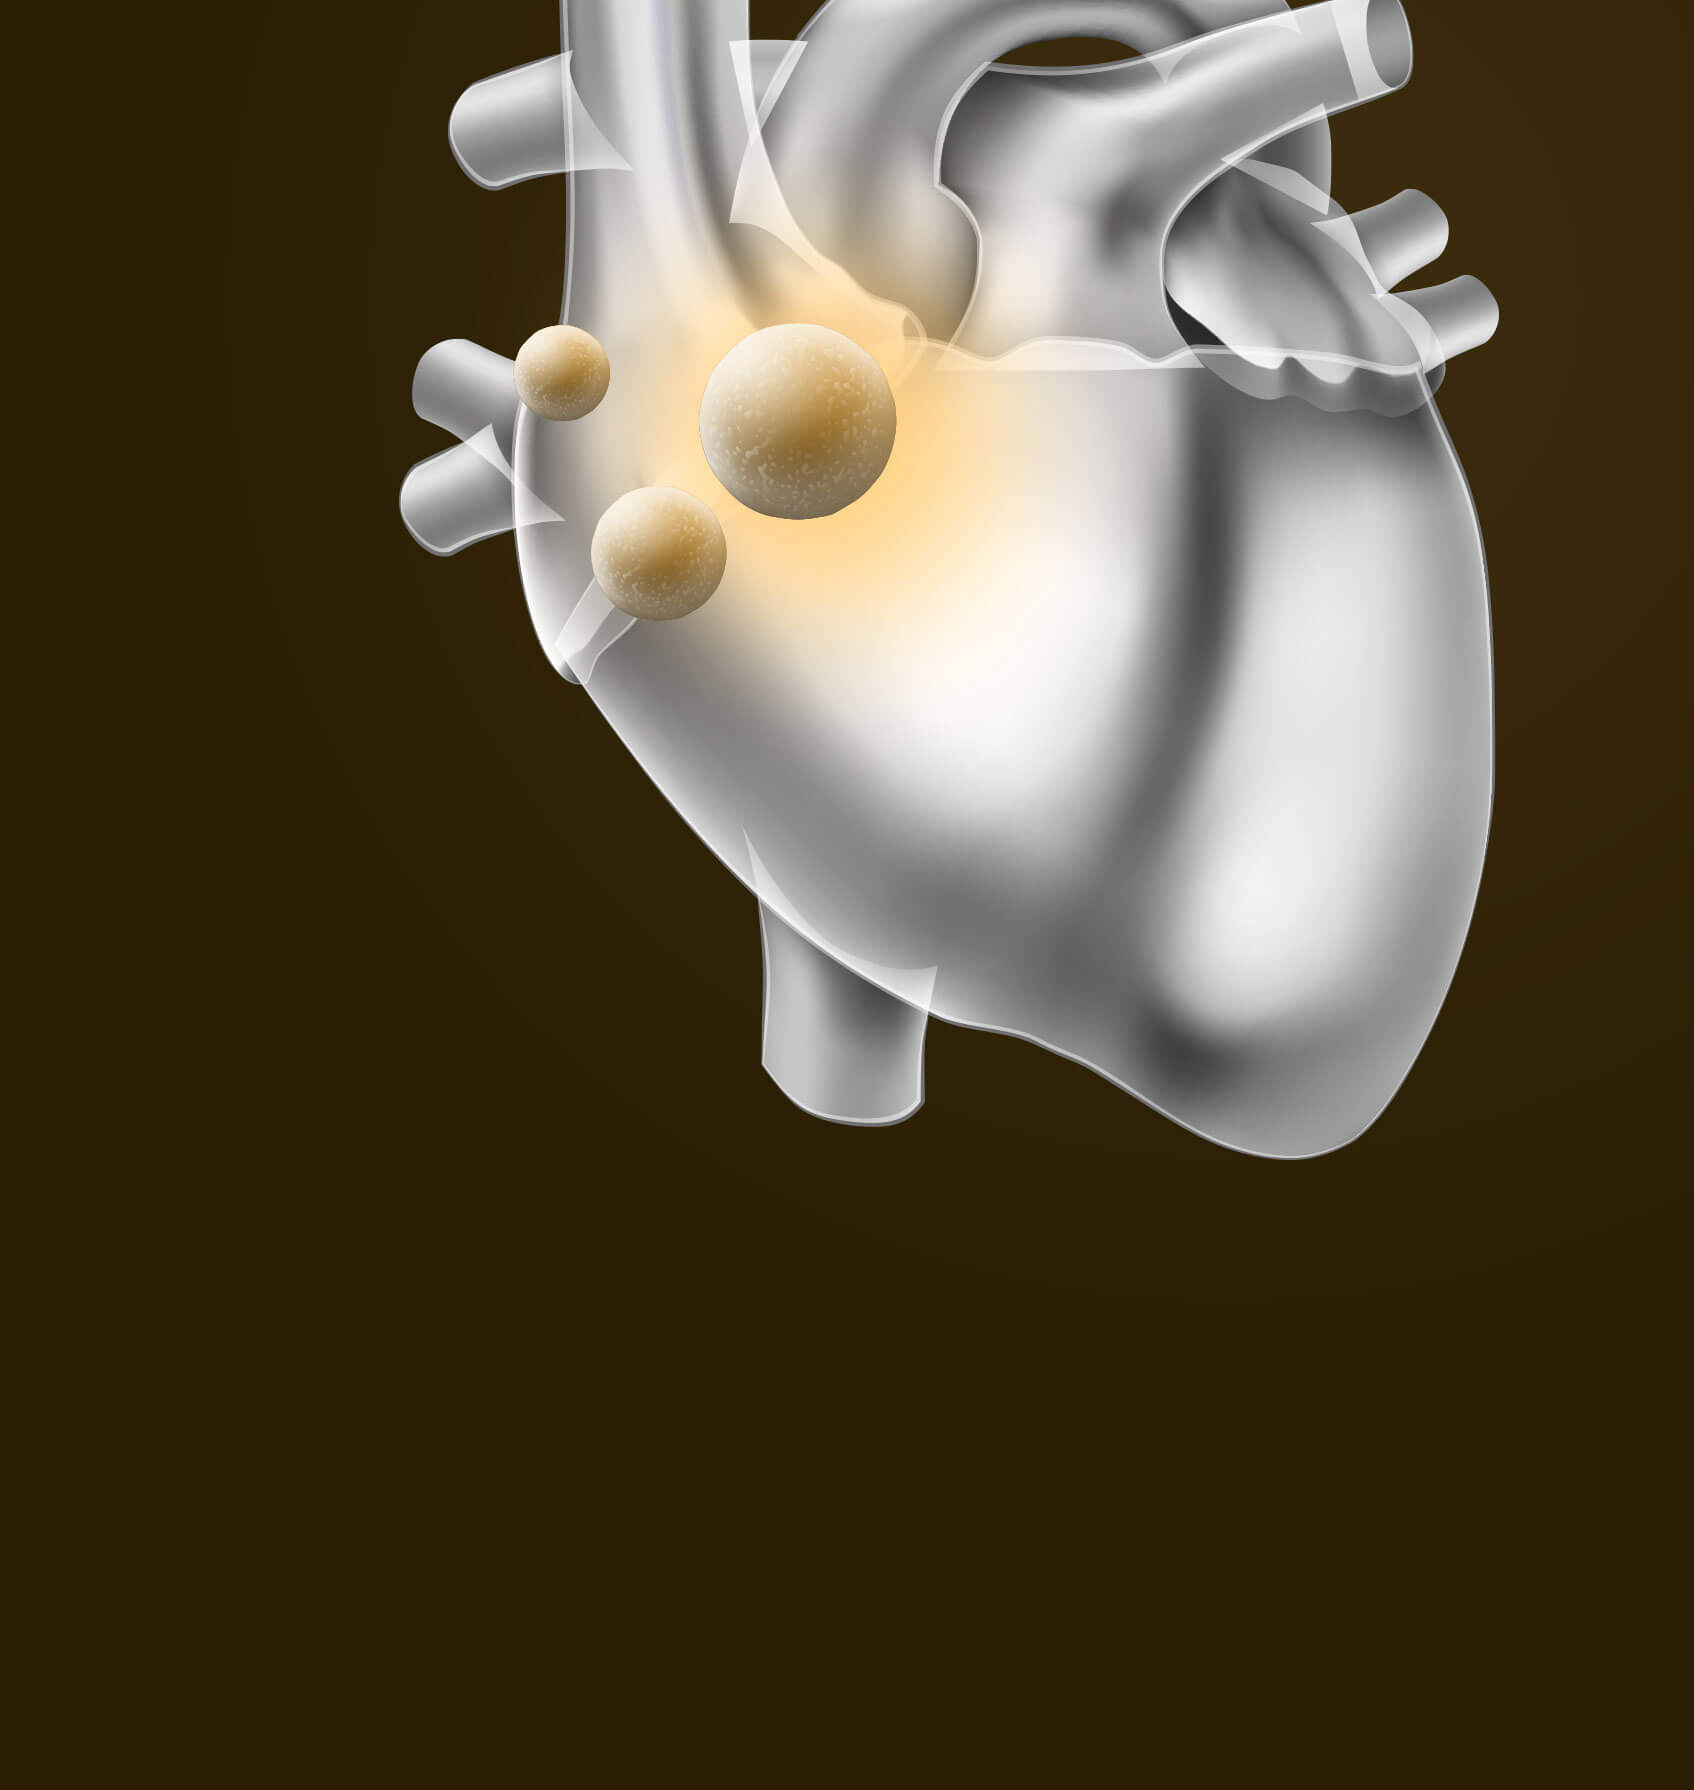 Cardiology Services - Best Heart Treatment